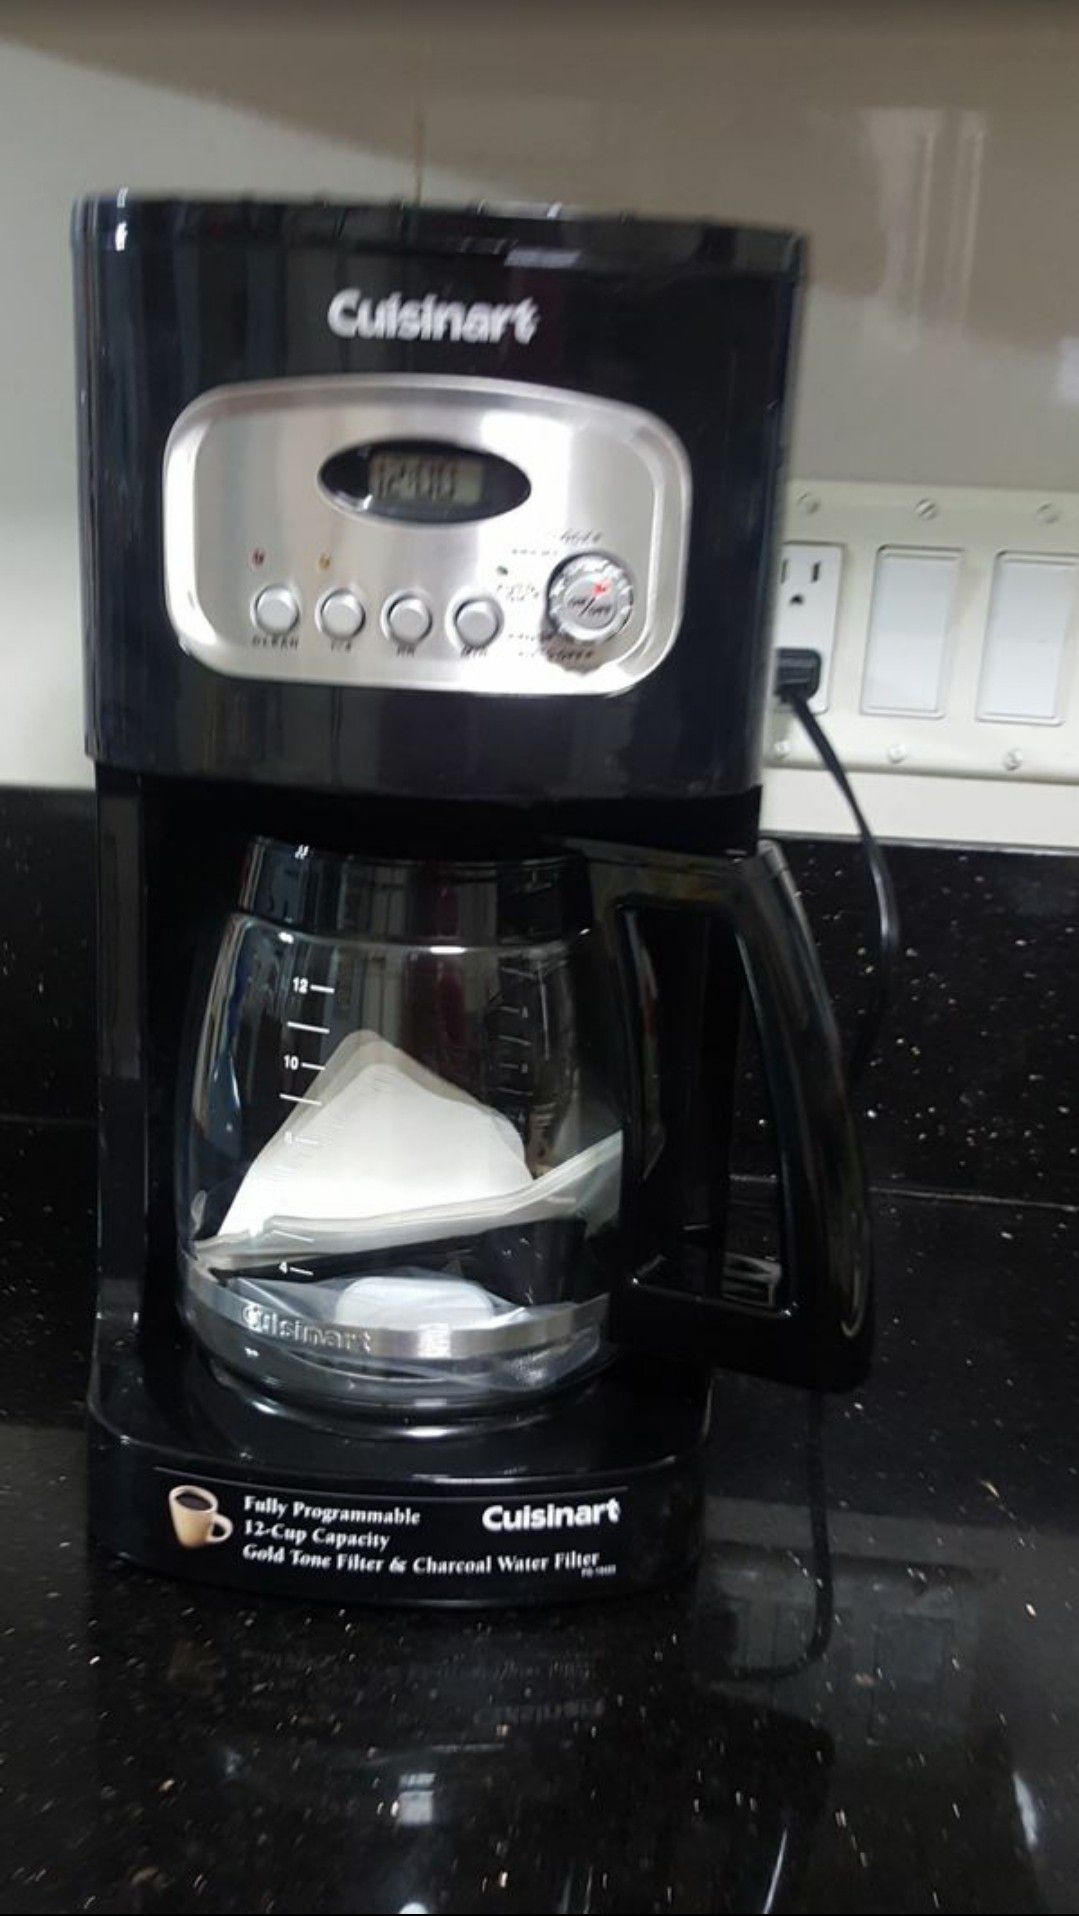 Cuisinar programmable coffee maker